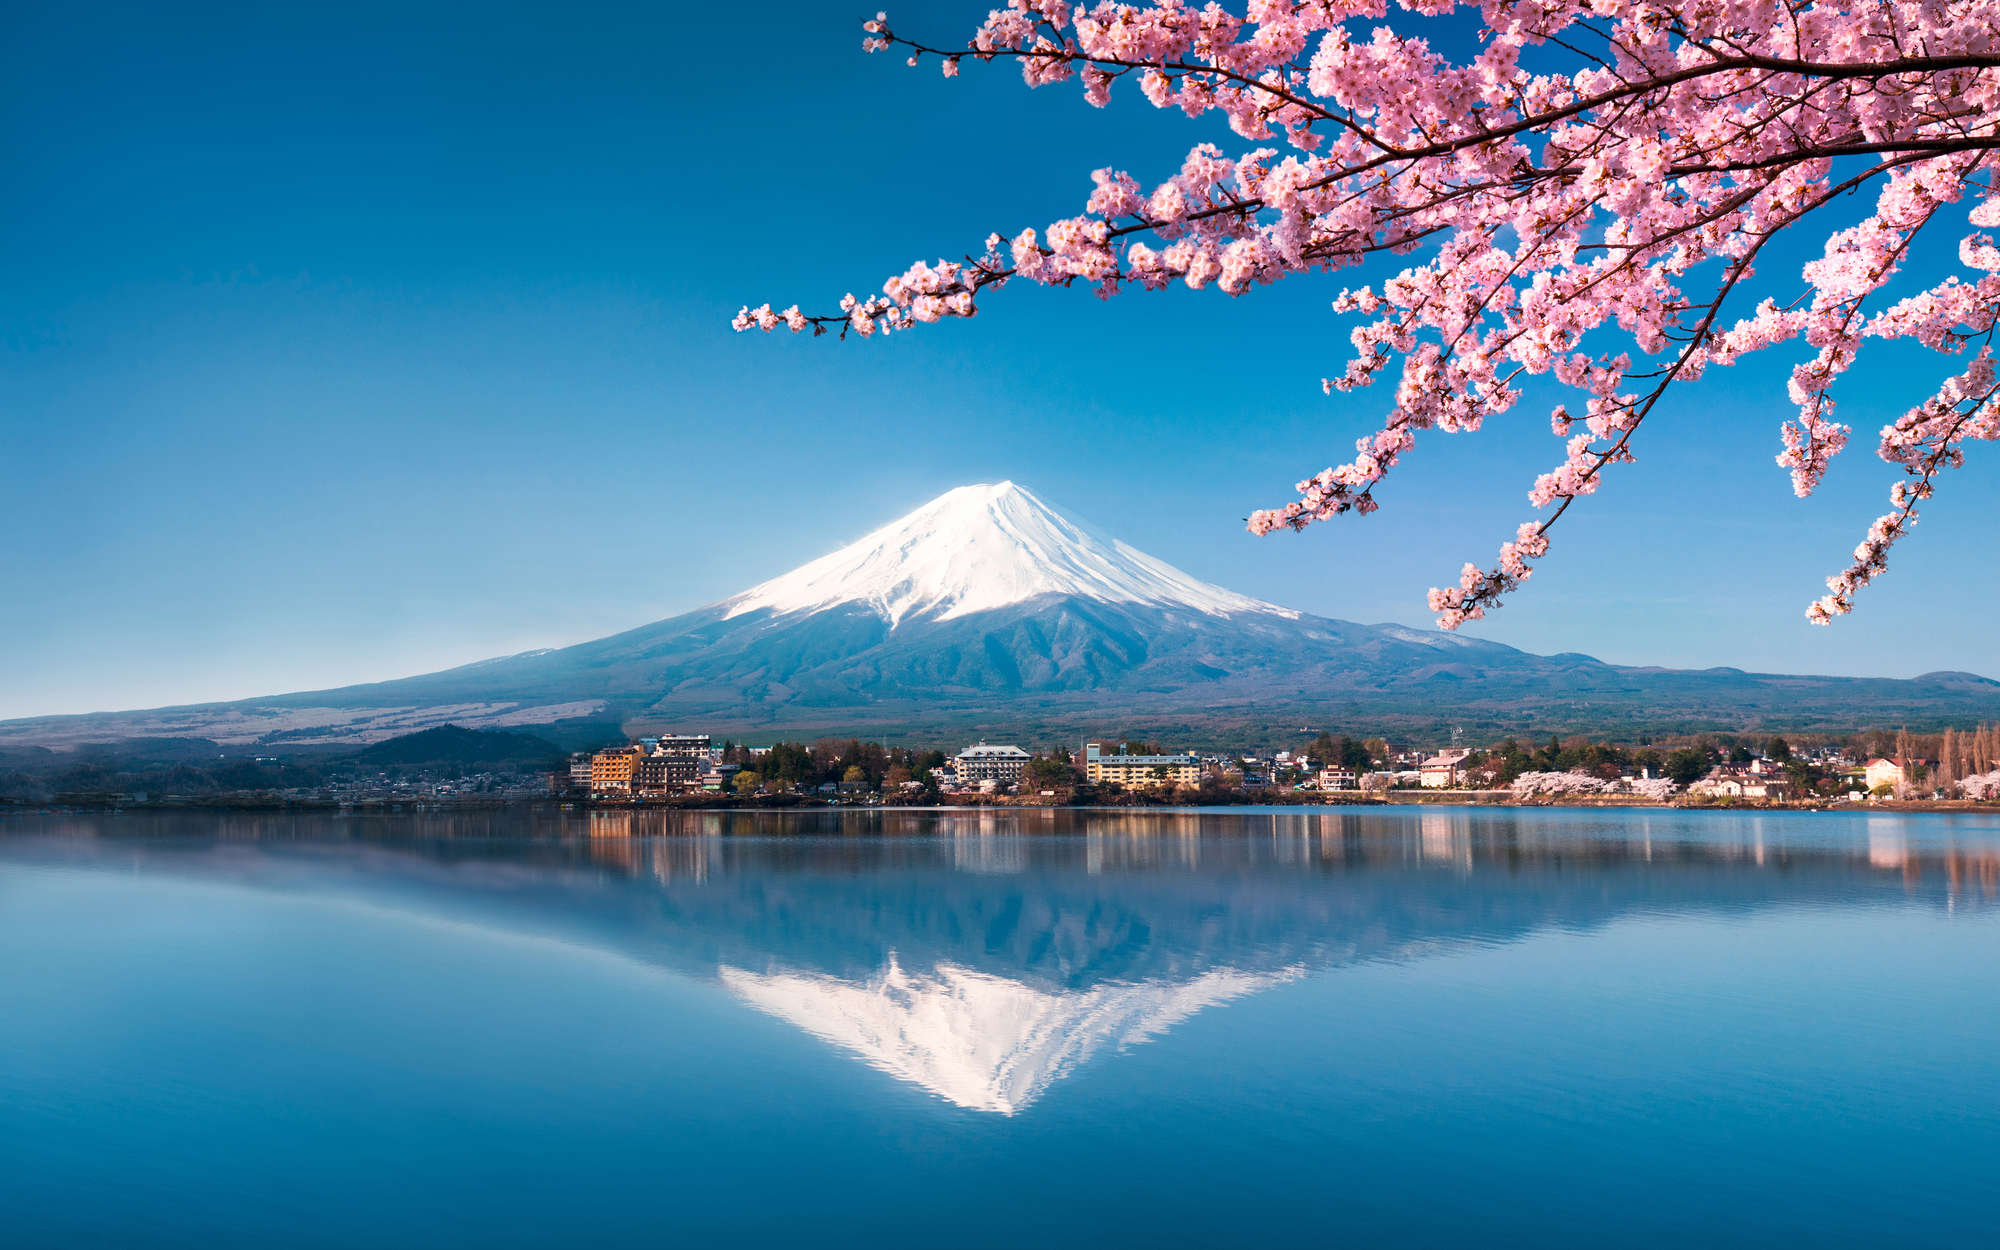             Fotomurali Vulcano Fuji in Giappone - Pile liscio premium
        